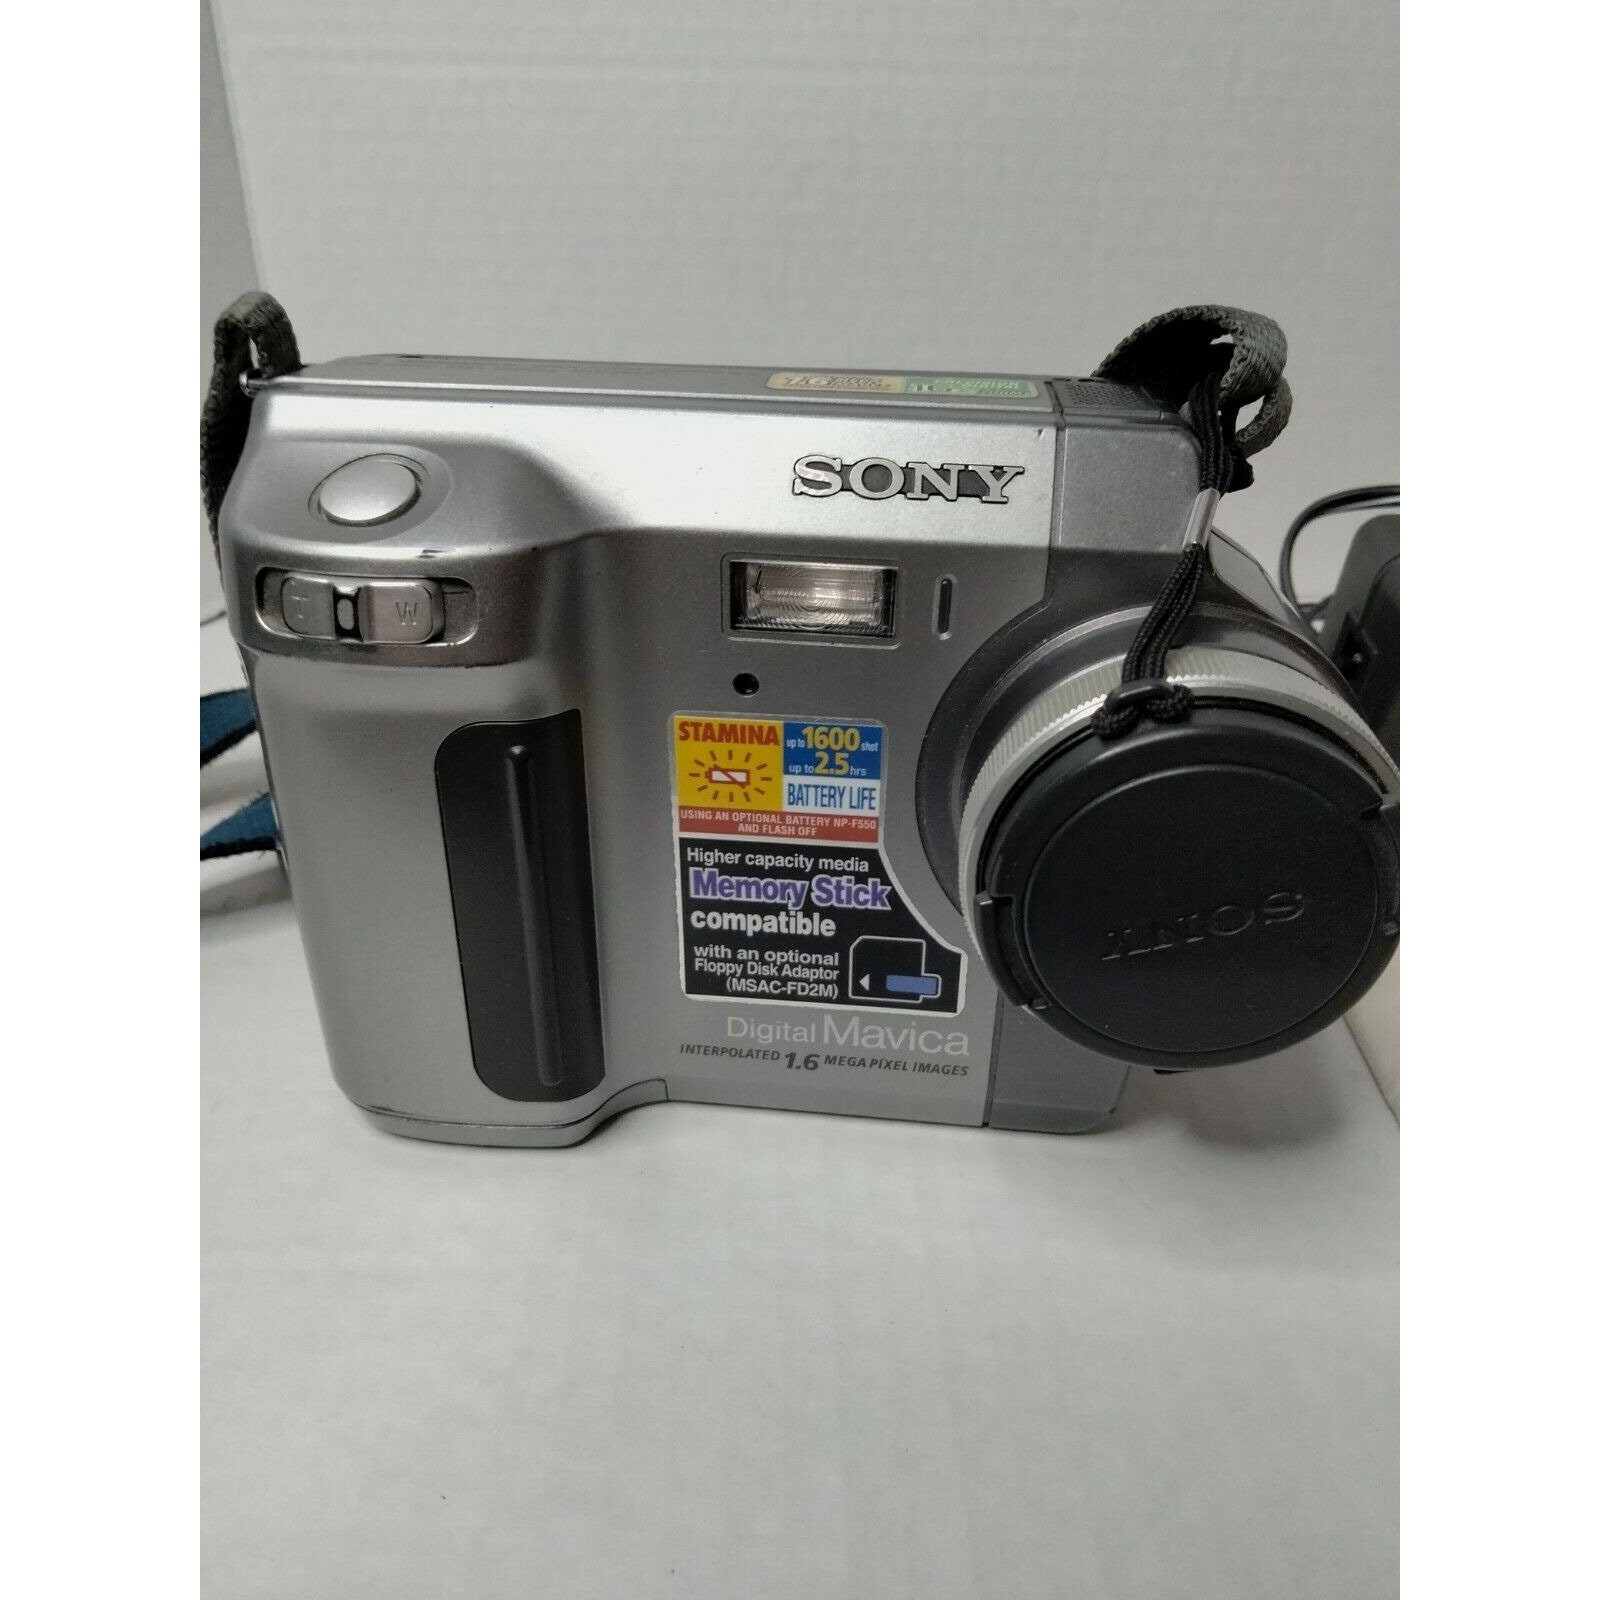 Sony Mavica MVC-FD90 1.6MP Digital Camera - Grey